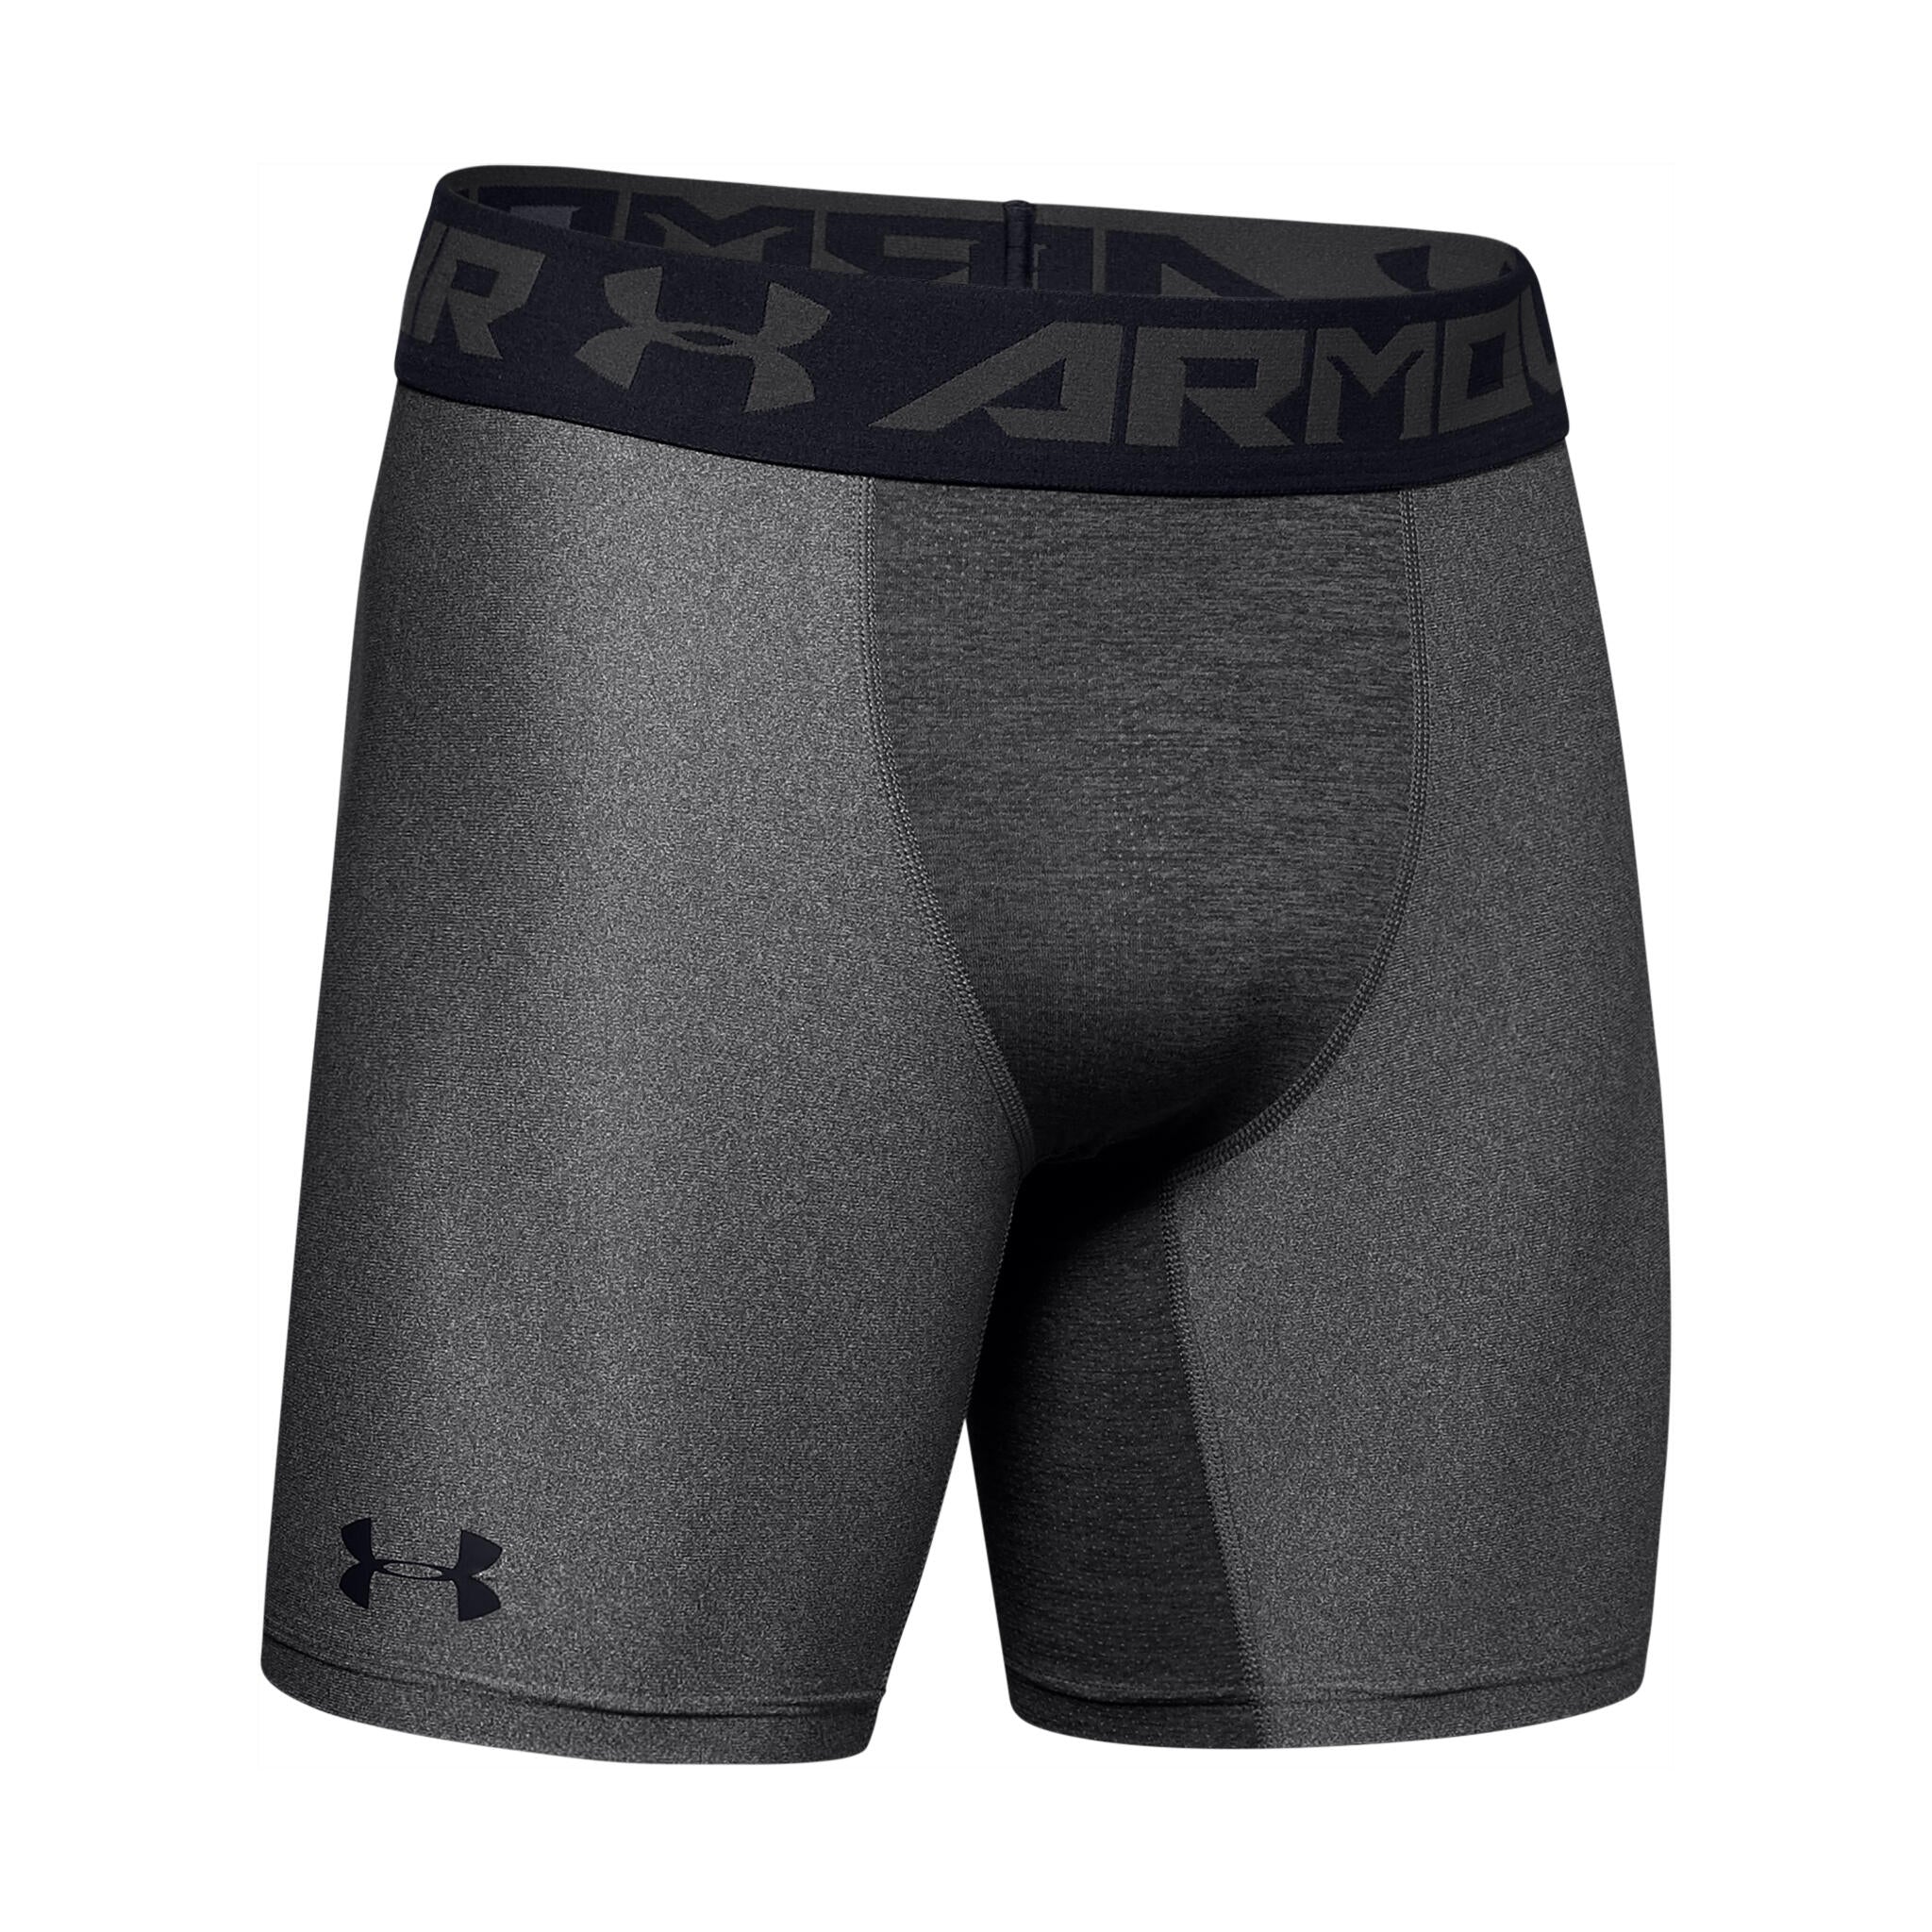 Under Armour HeatGear Armour 2.0 Mid Compression Men's Shorts